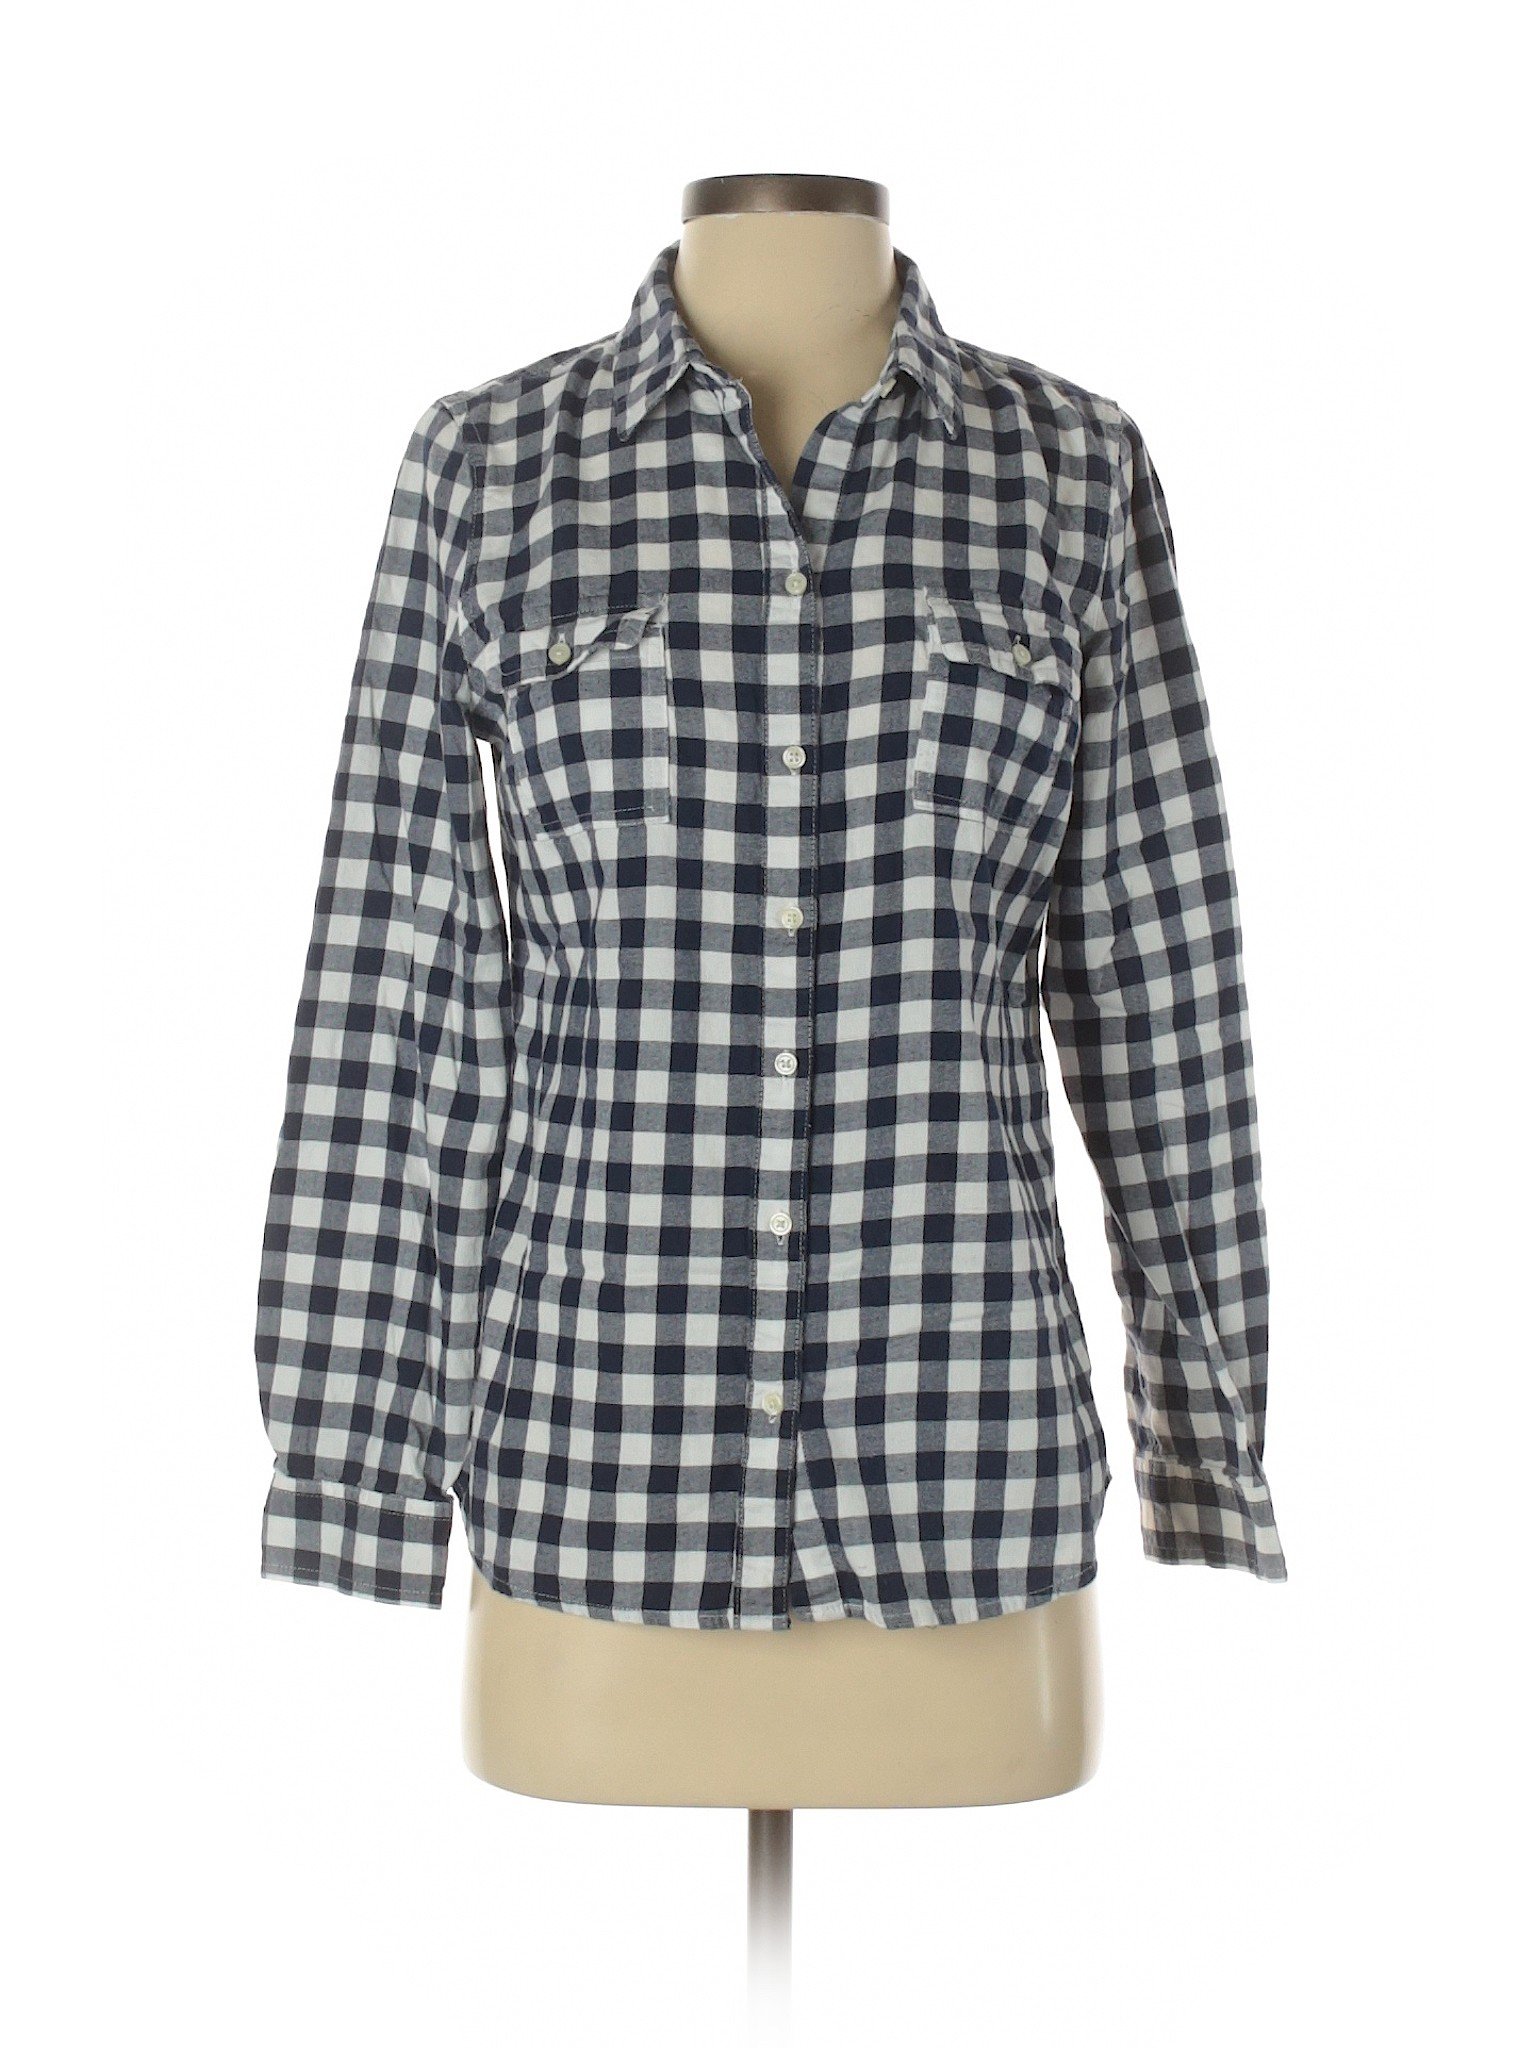 Old Navy Women Blue Long Sleeve Button-Down Shirt S | eBay